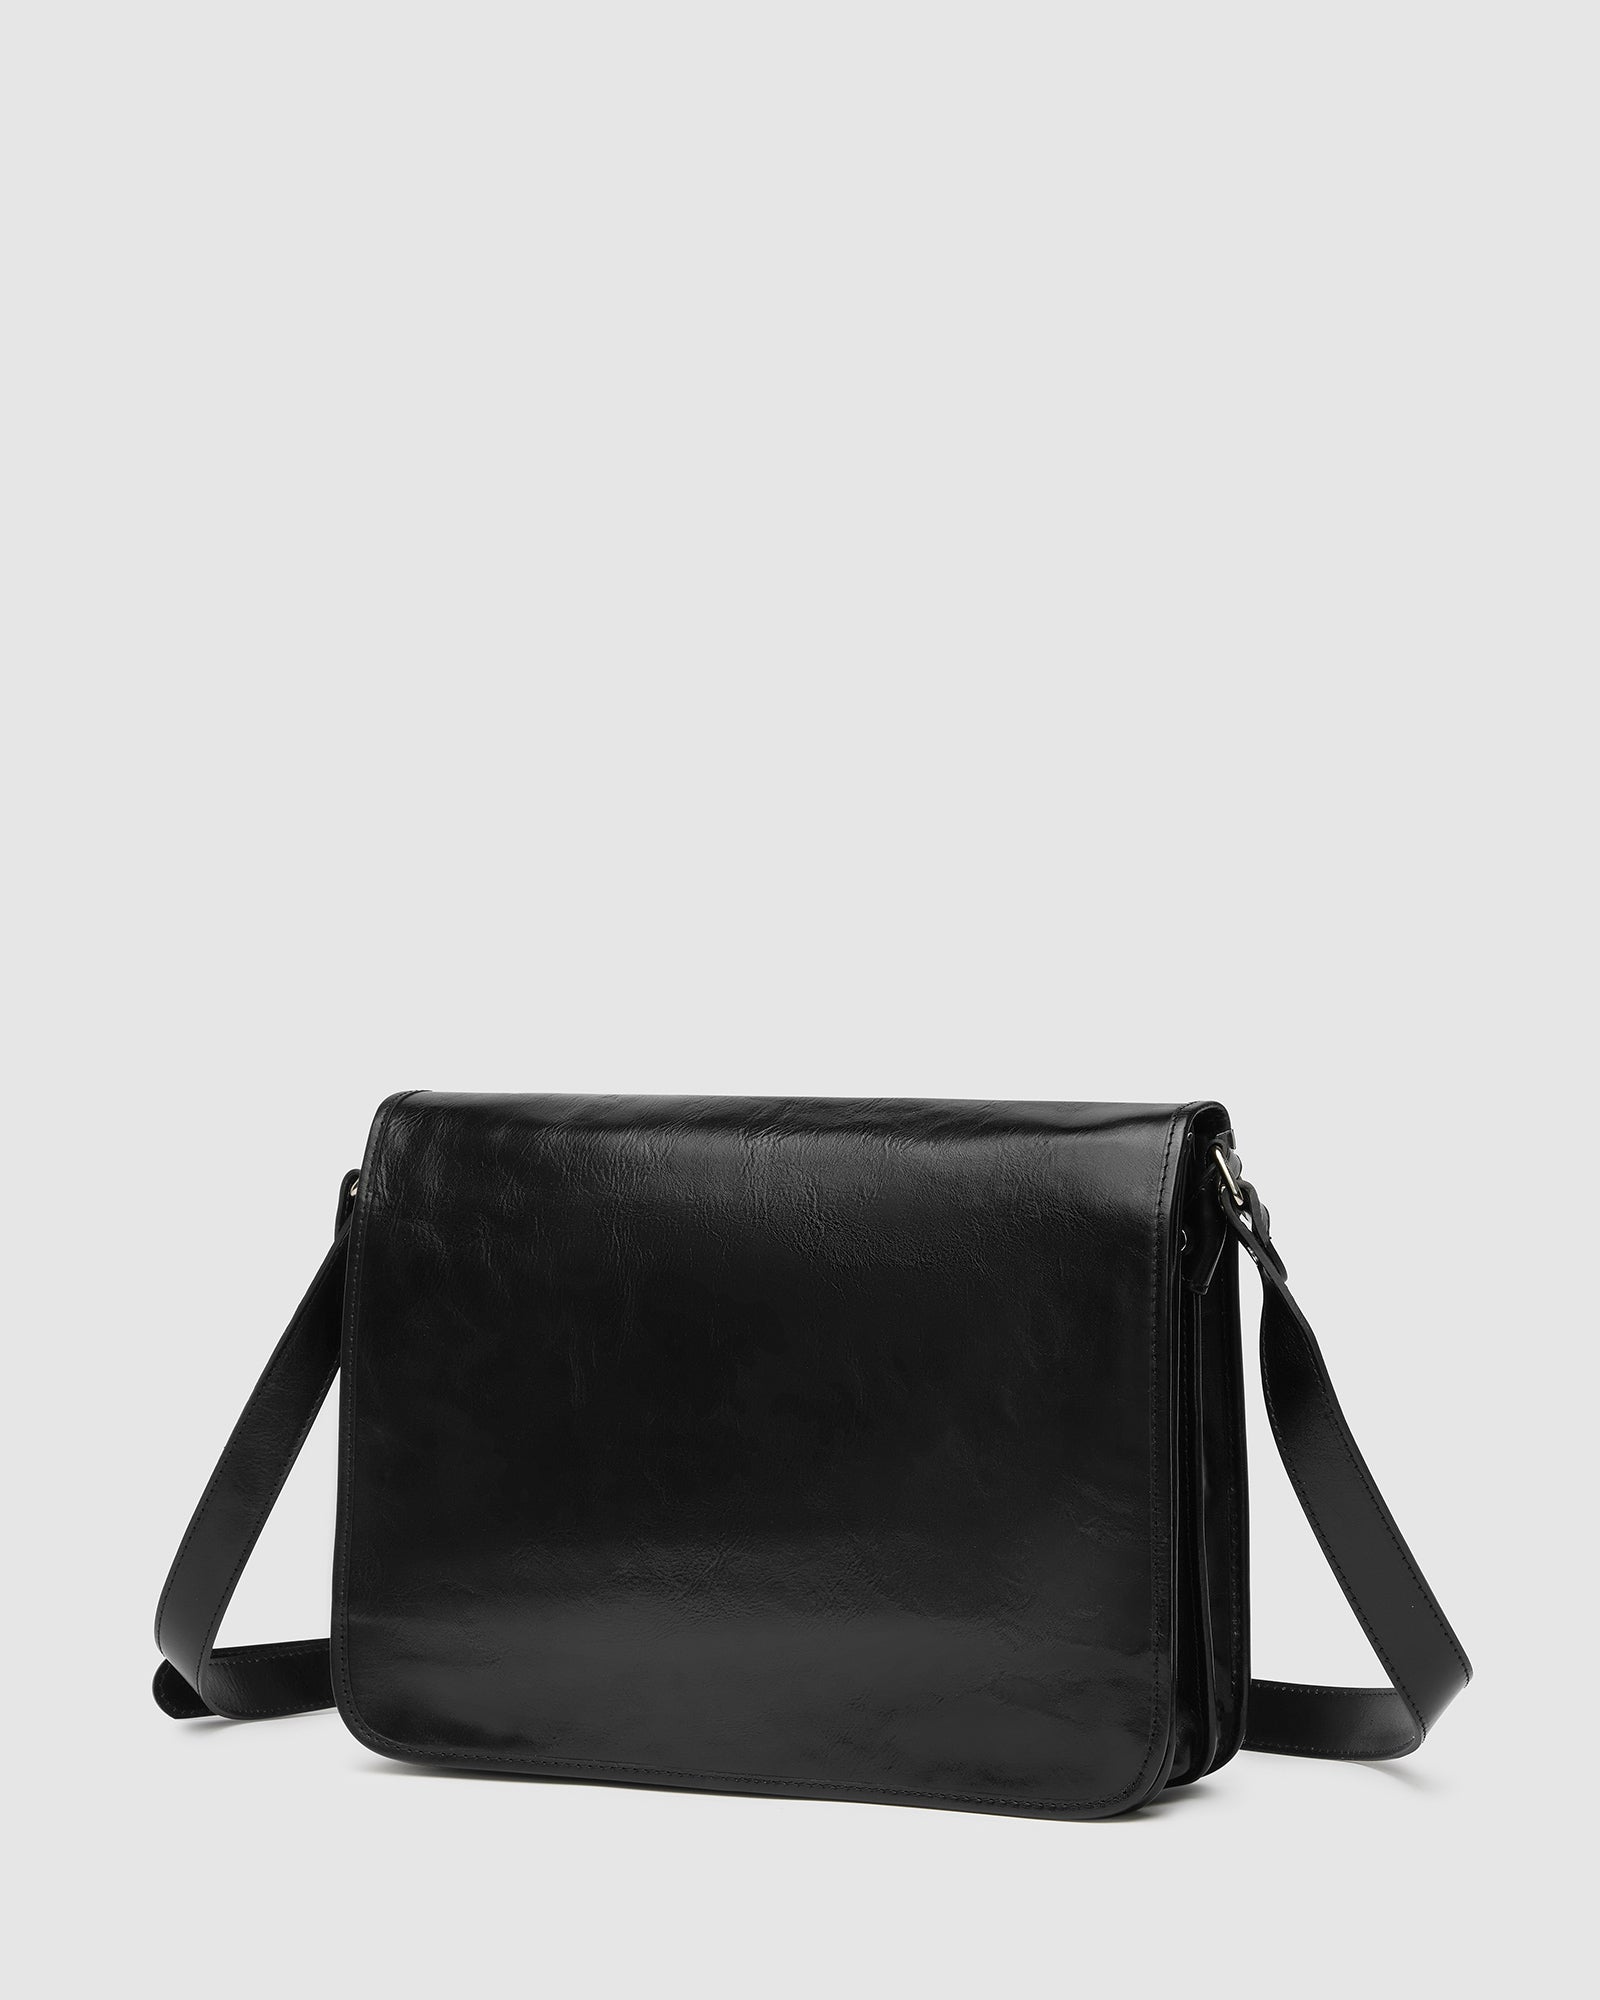 NERO Black - 15" Leather Messenger Bag